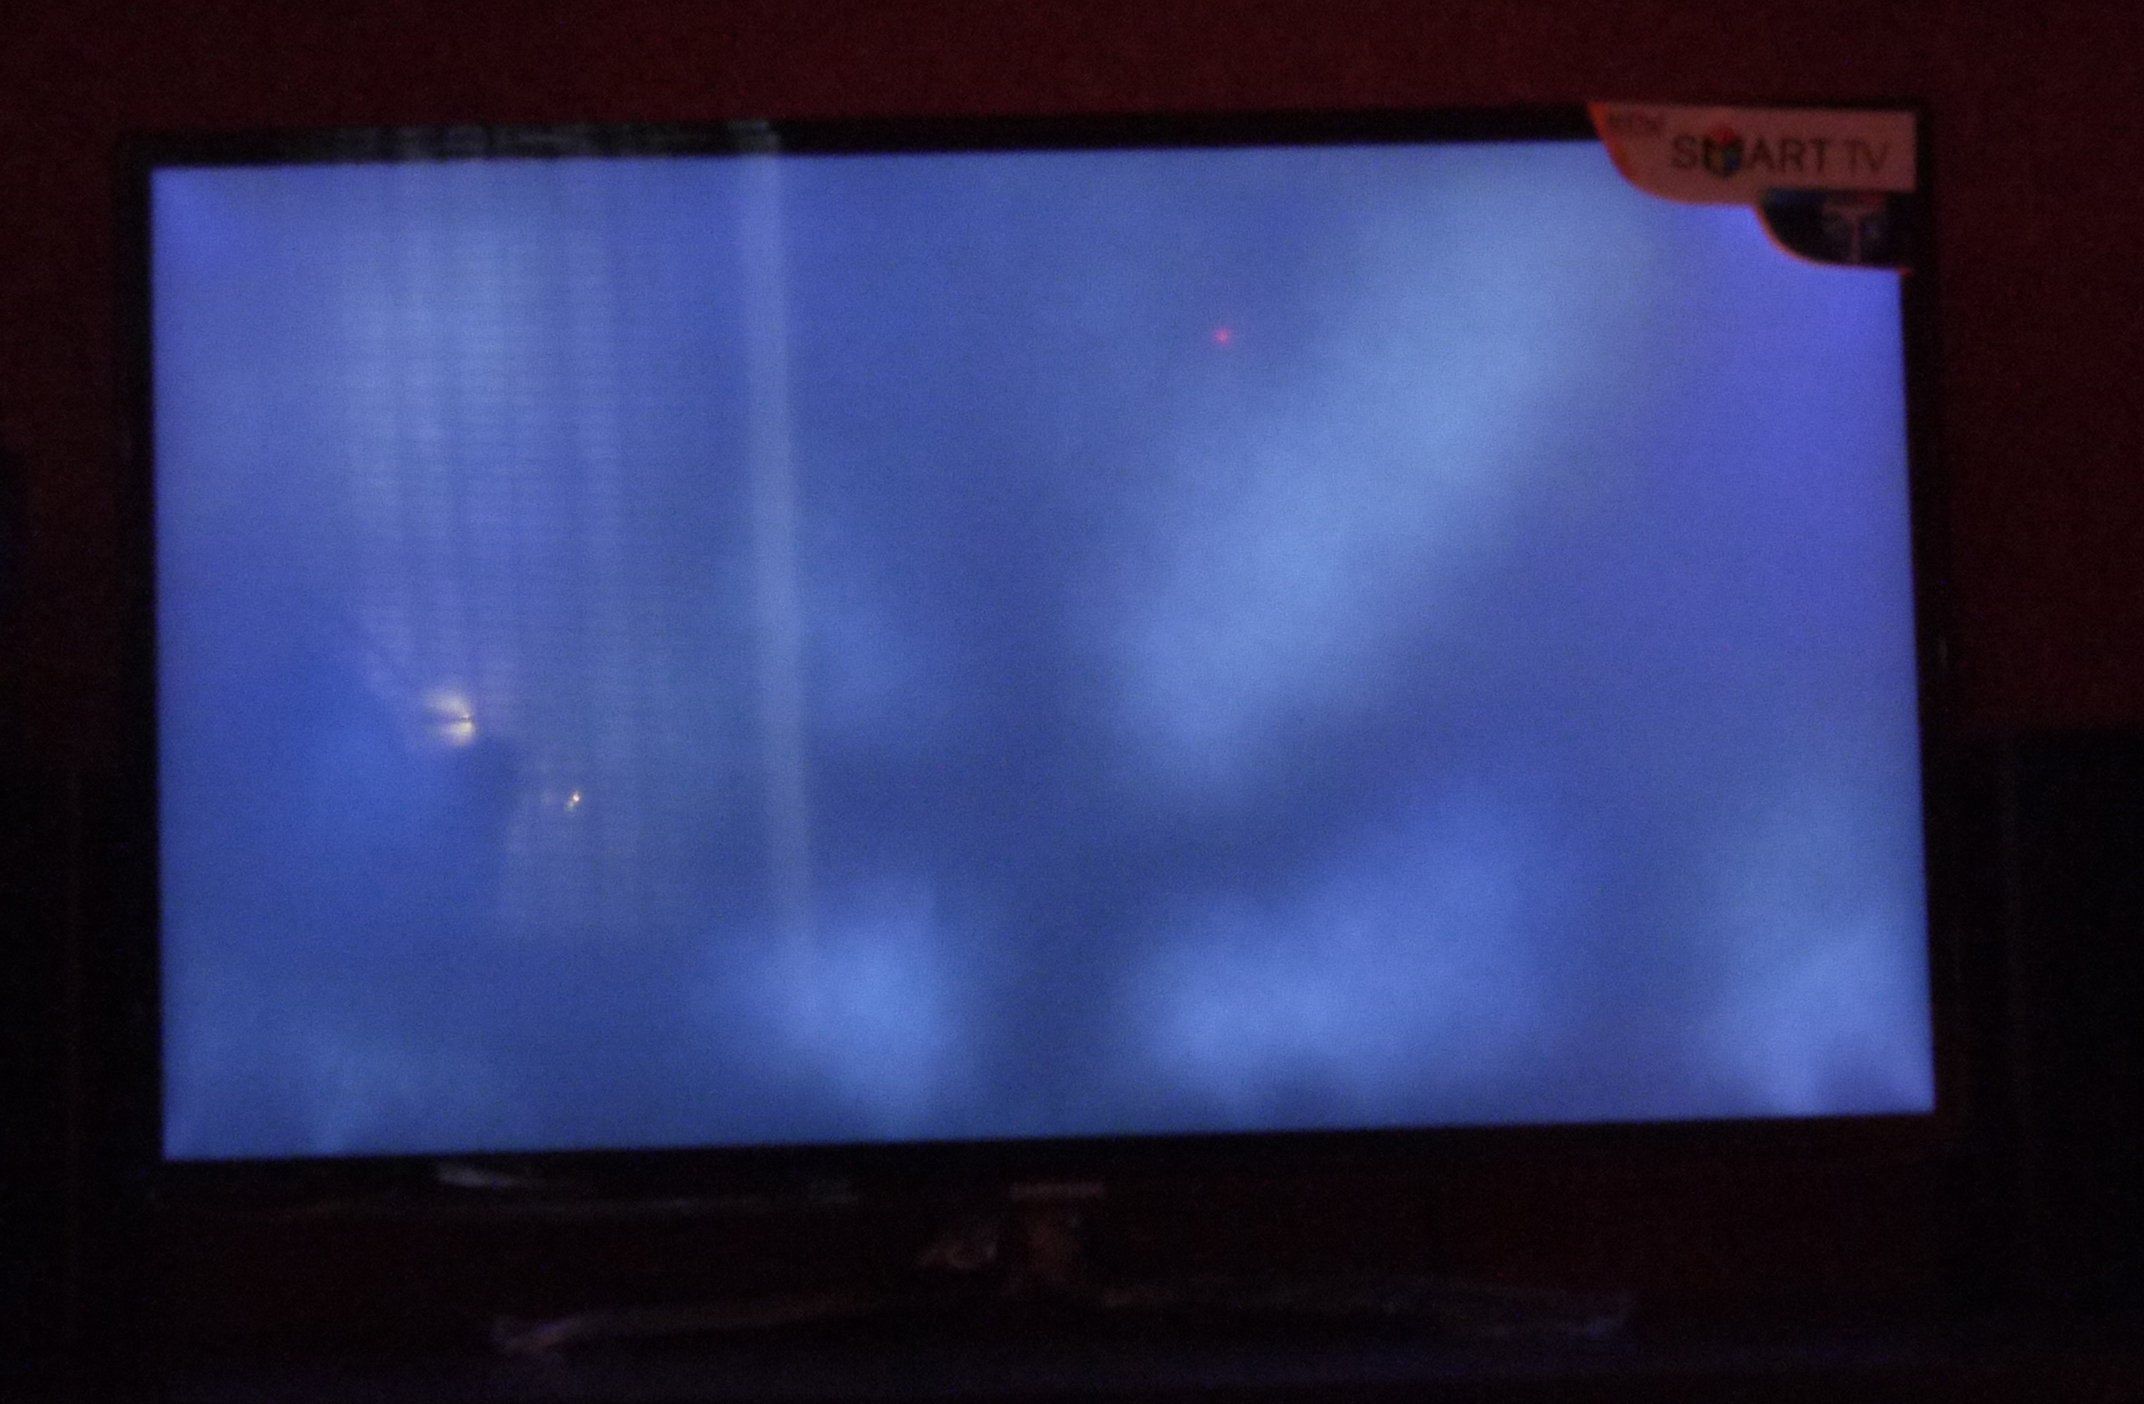 Появилось светлое пятно на экране. Засветка экрана телевизора. Засветка матрицы телевизора. Тёмное пятно на экране ЖК телевизора. Битый пиксель на телевизоре.